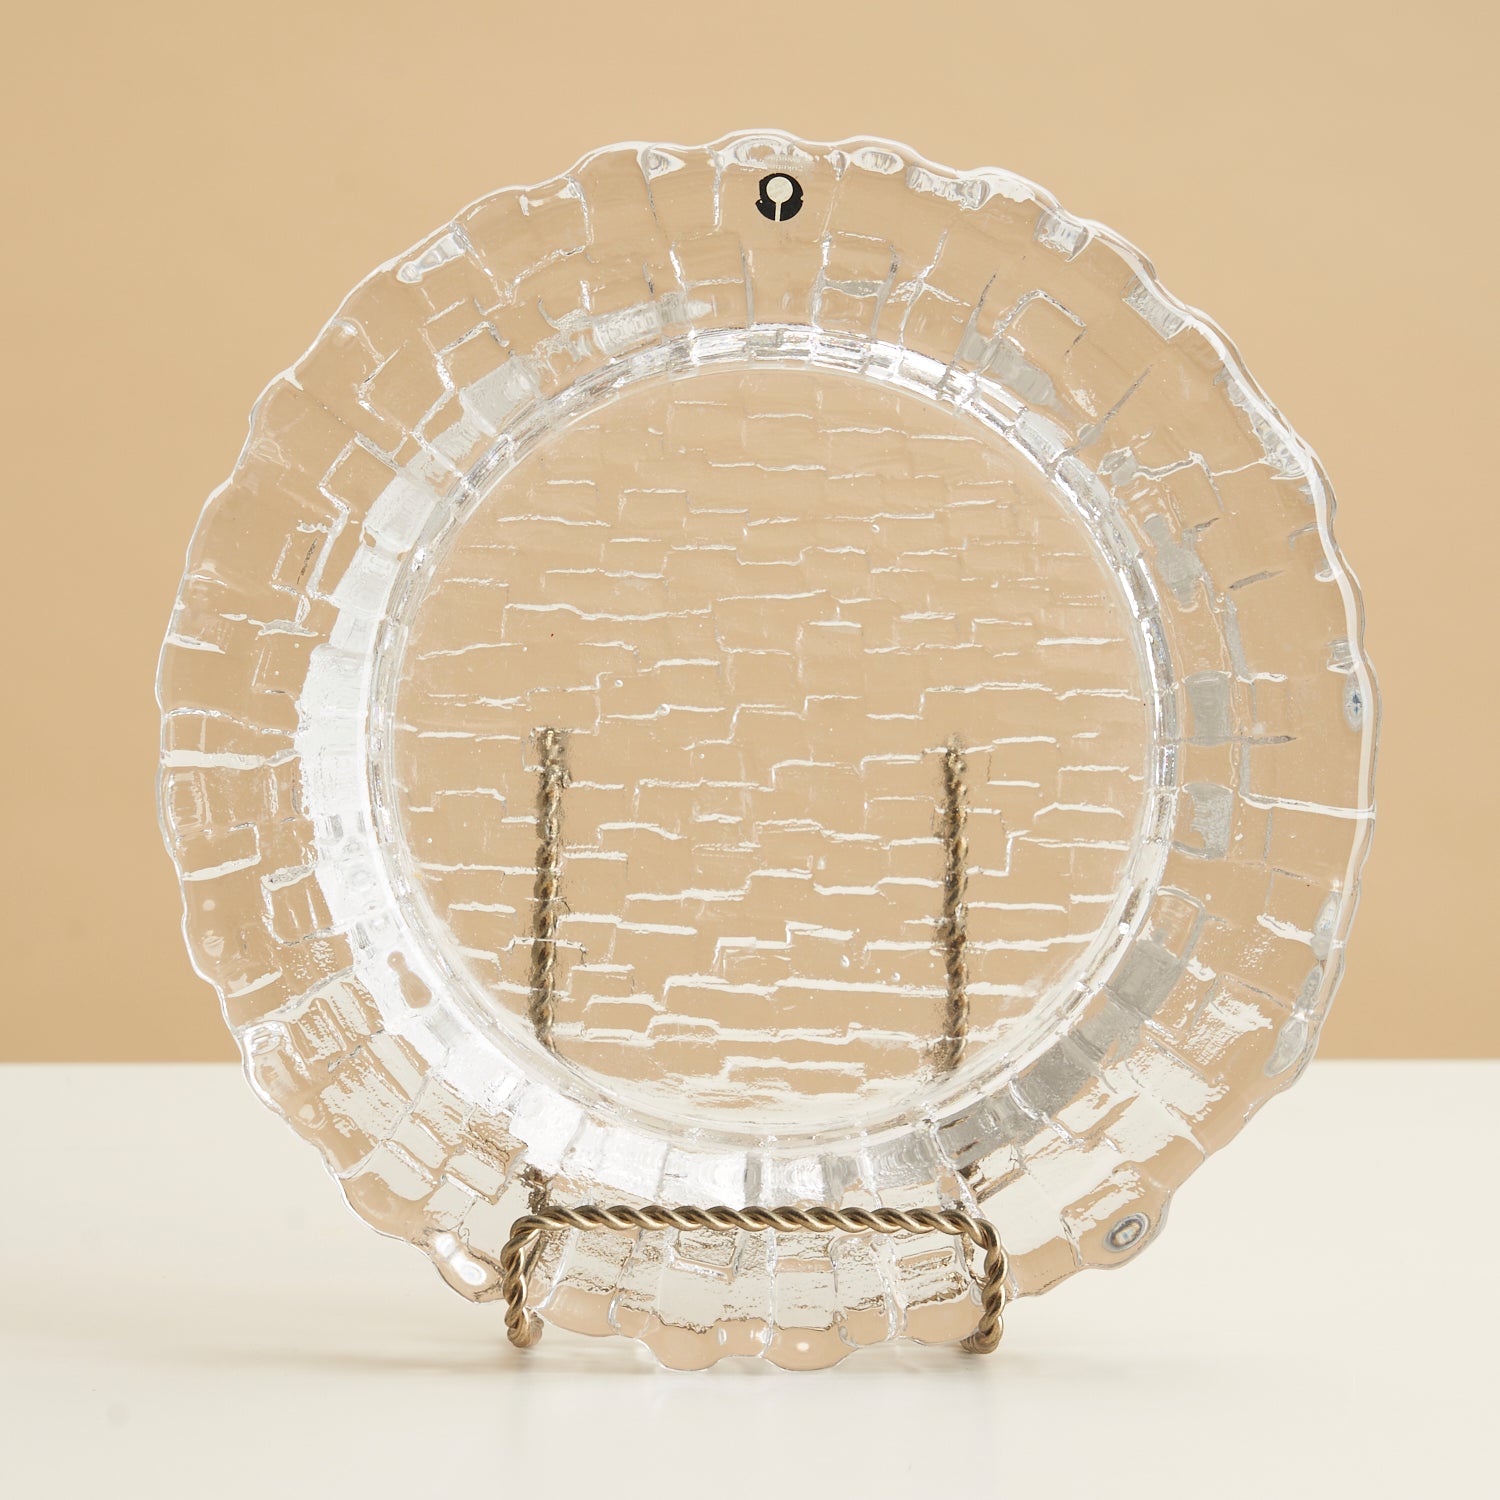 Decorative Glass Dish by Pukeborg